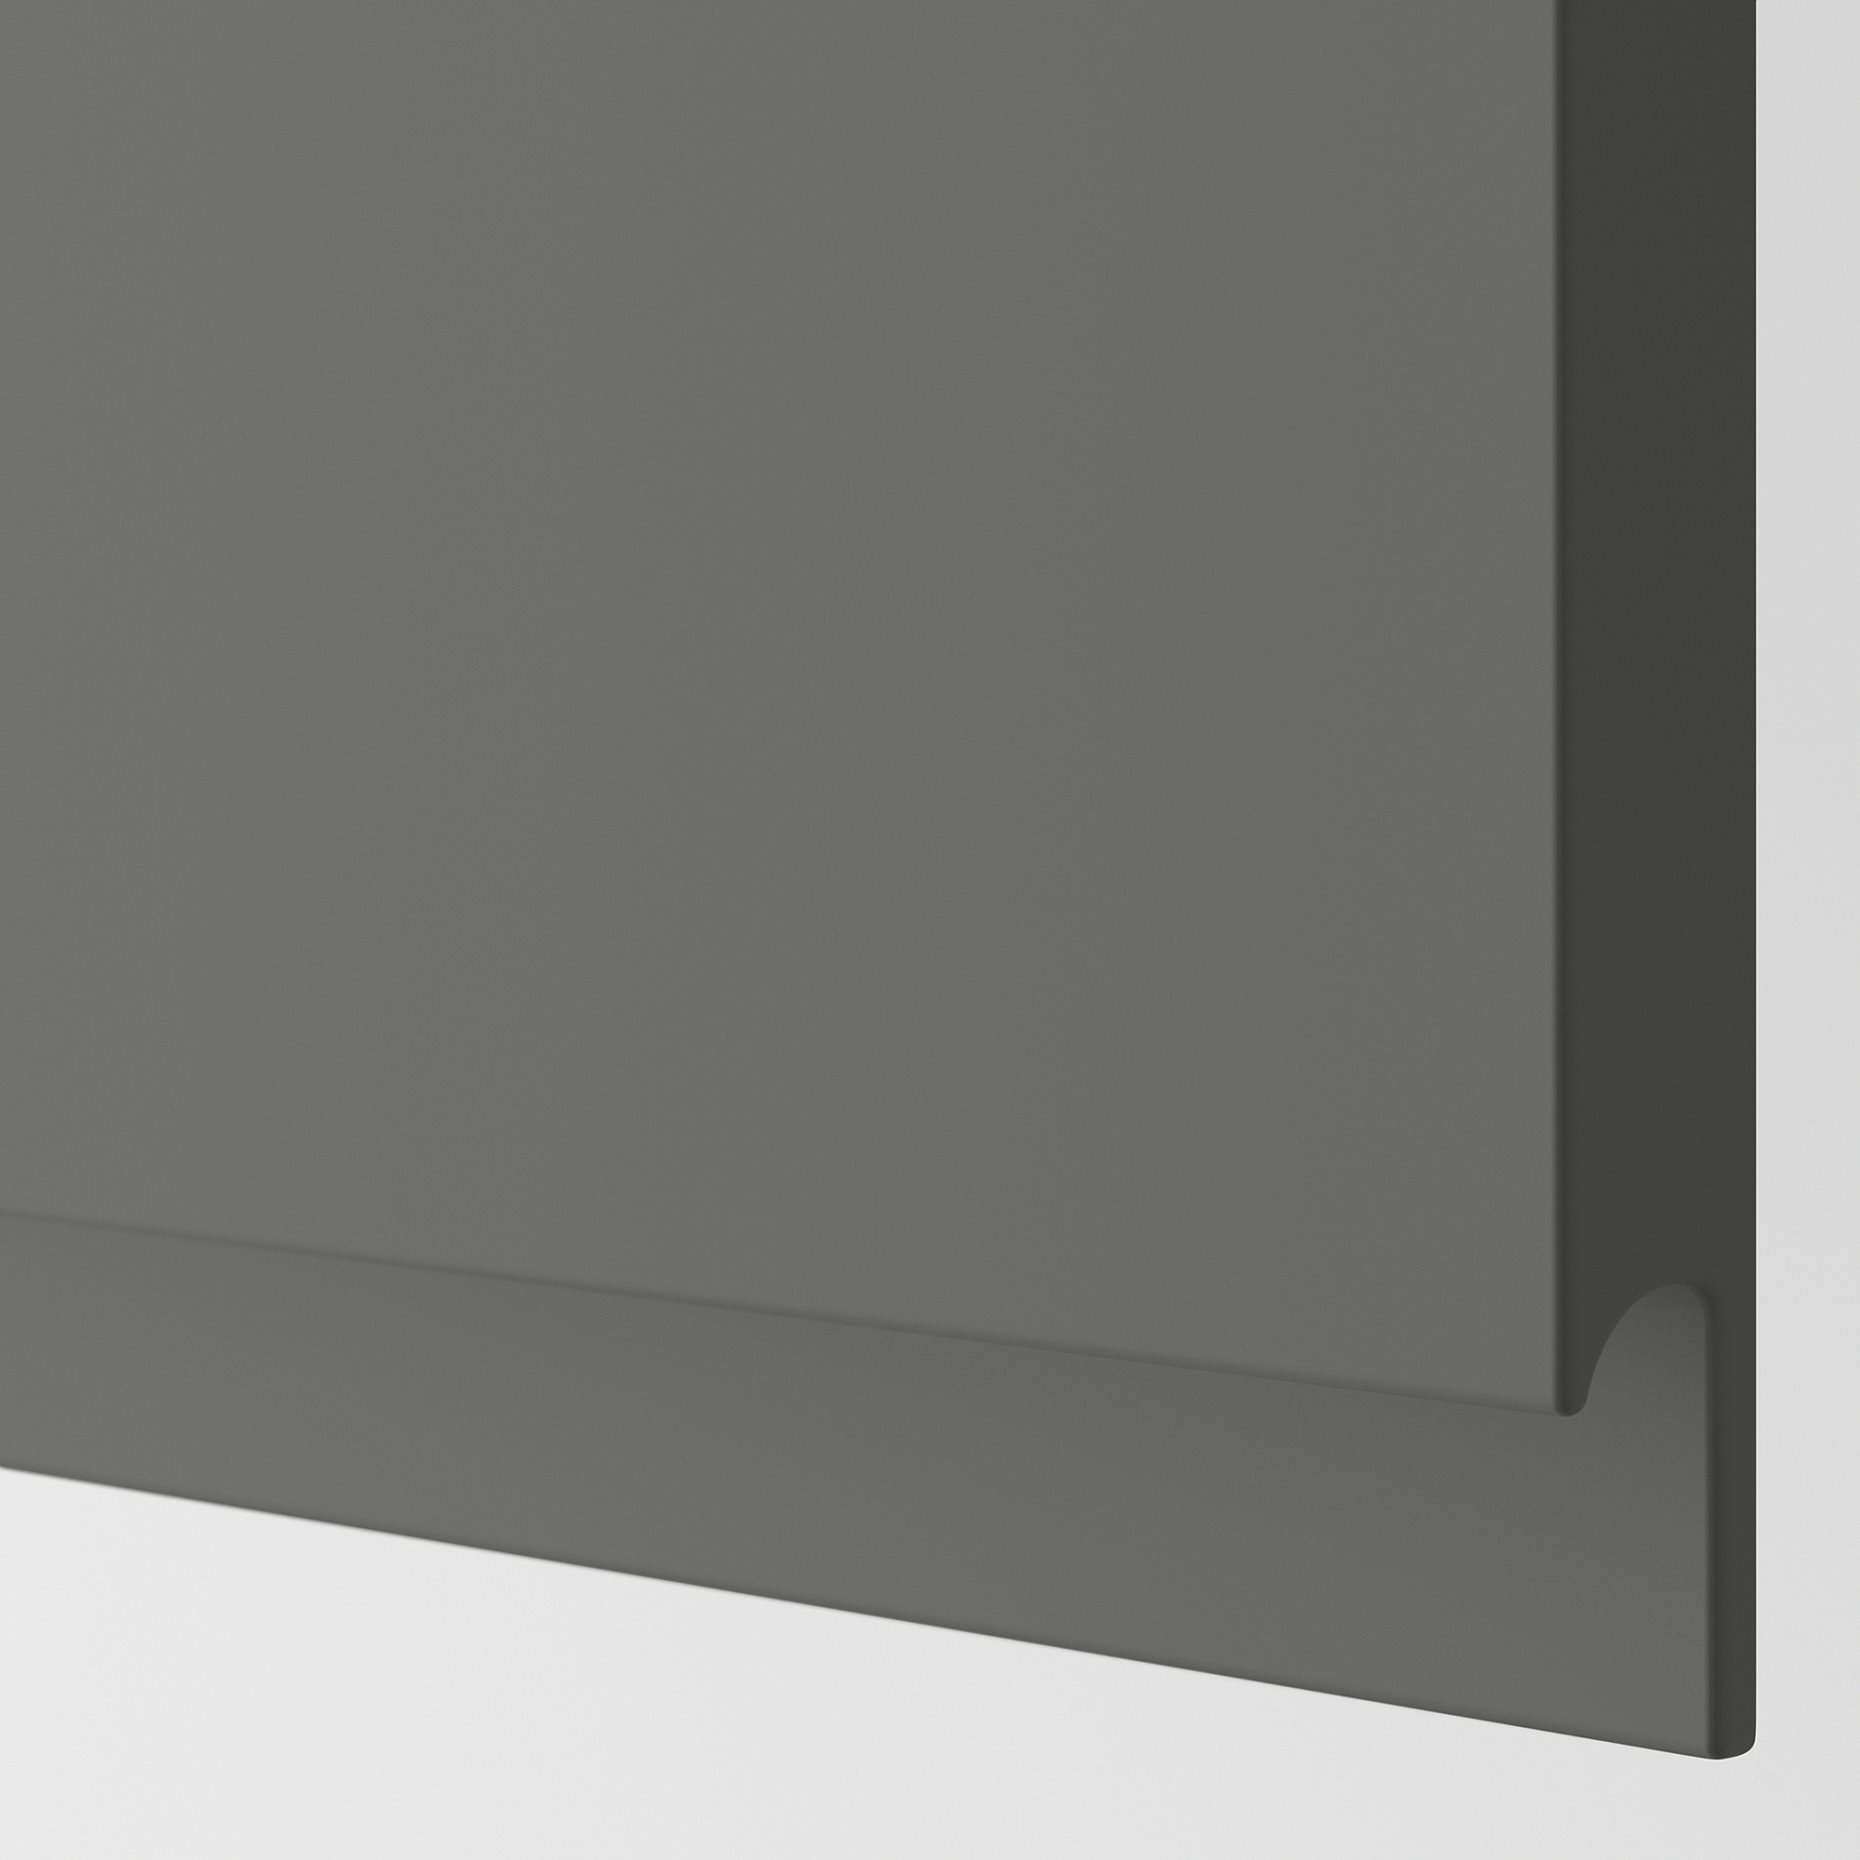 METOD, ντουλάπι βάσης με ράφια, 60x60 cm, 194.675.07